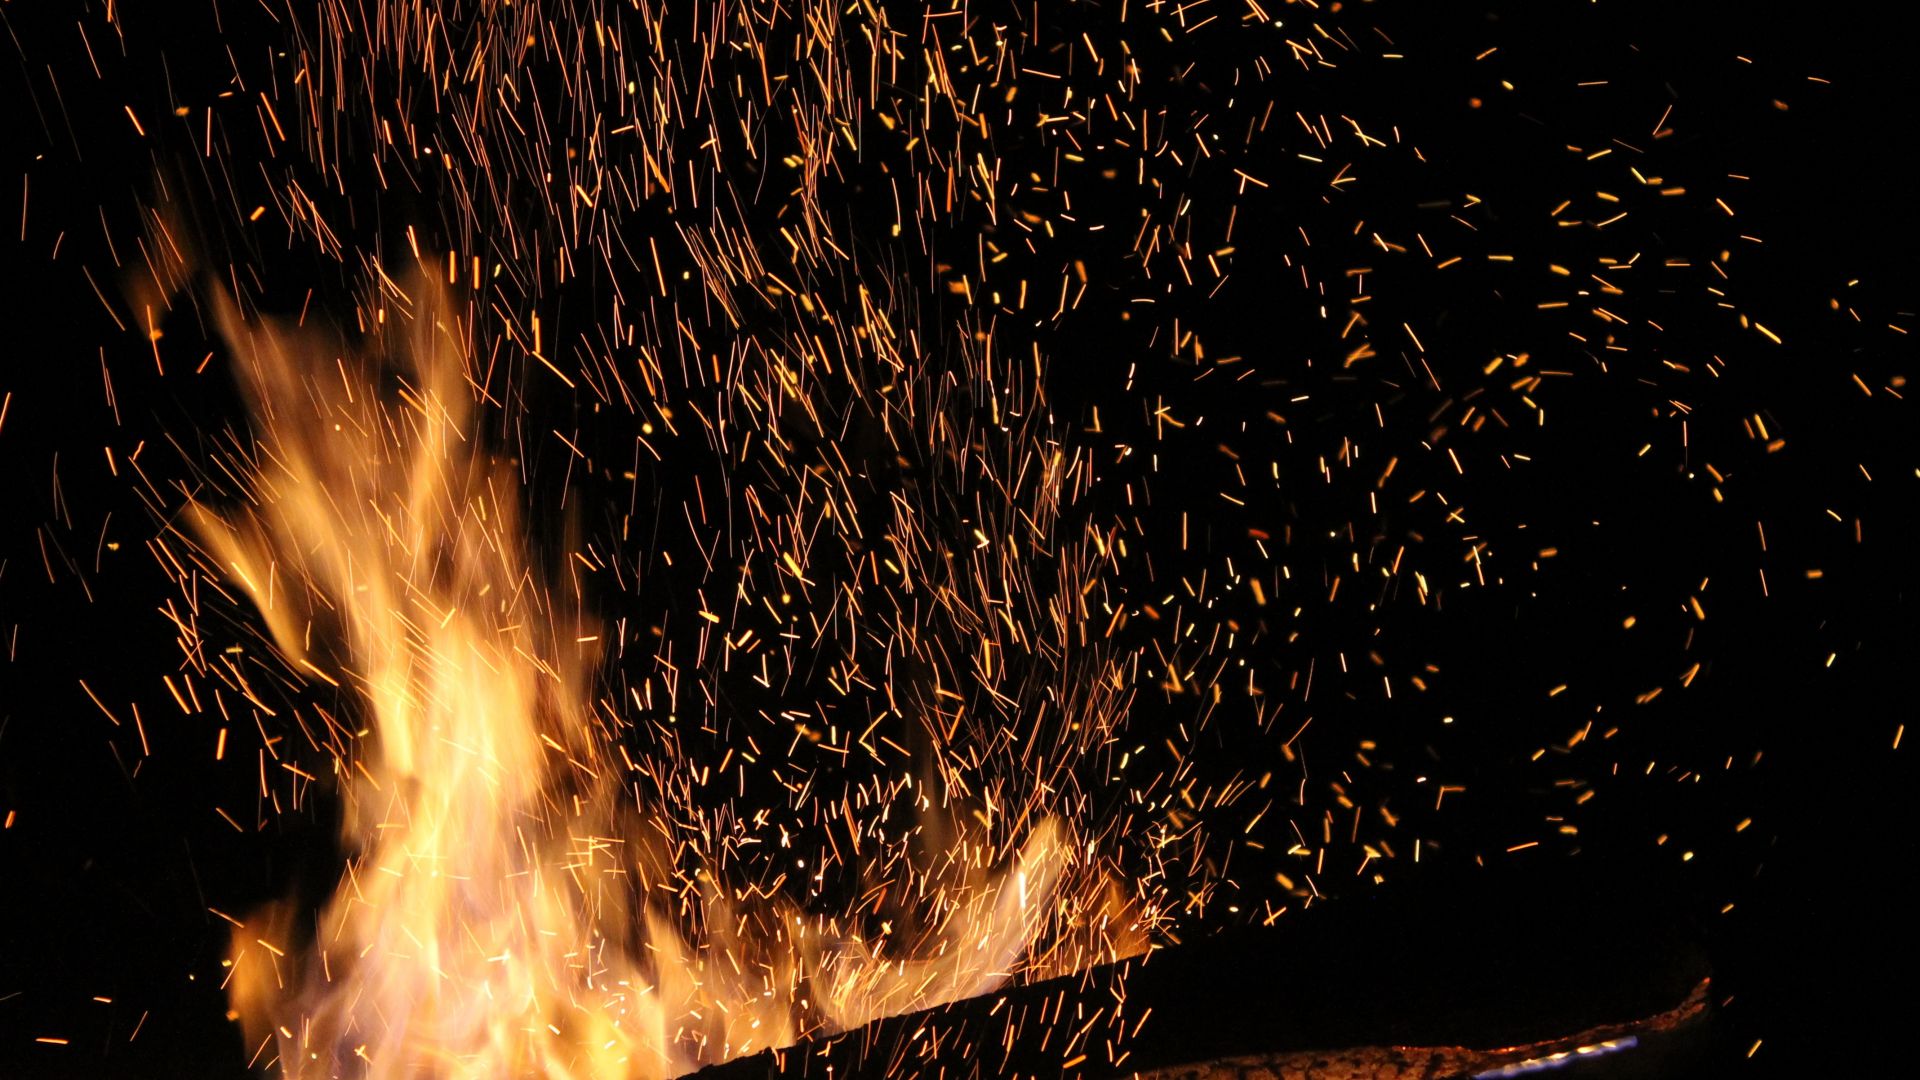 Wallpaper Fire, campfire, flames at night